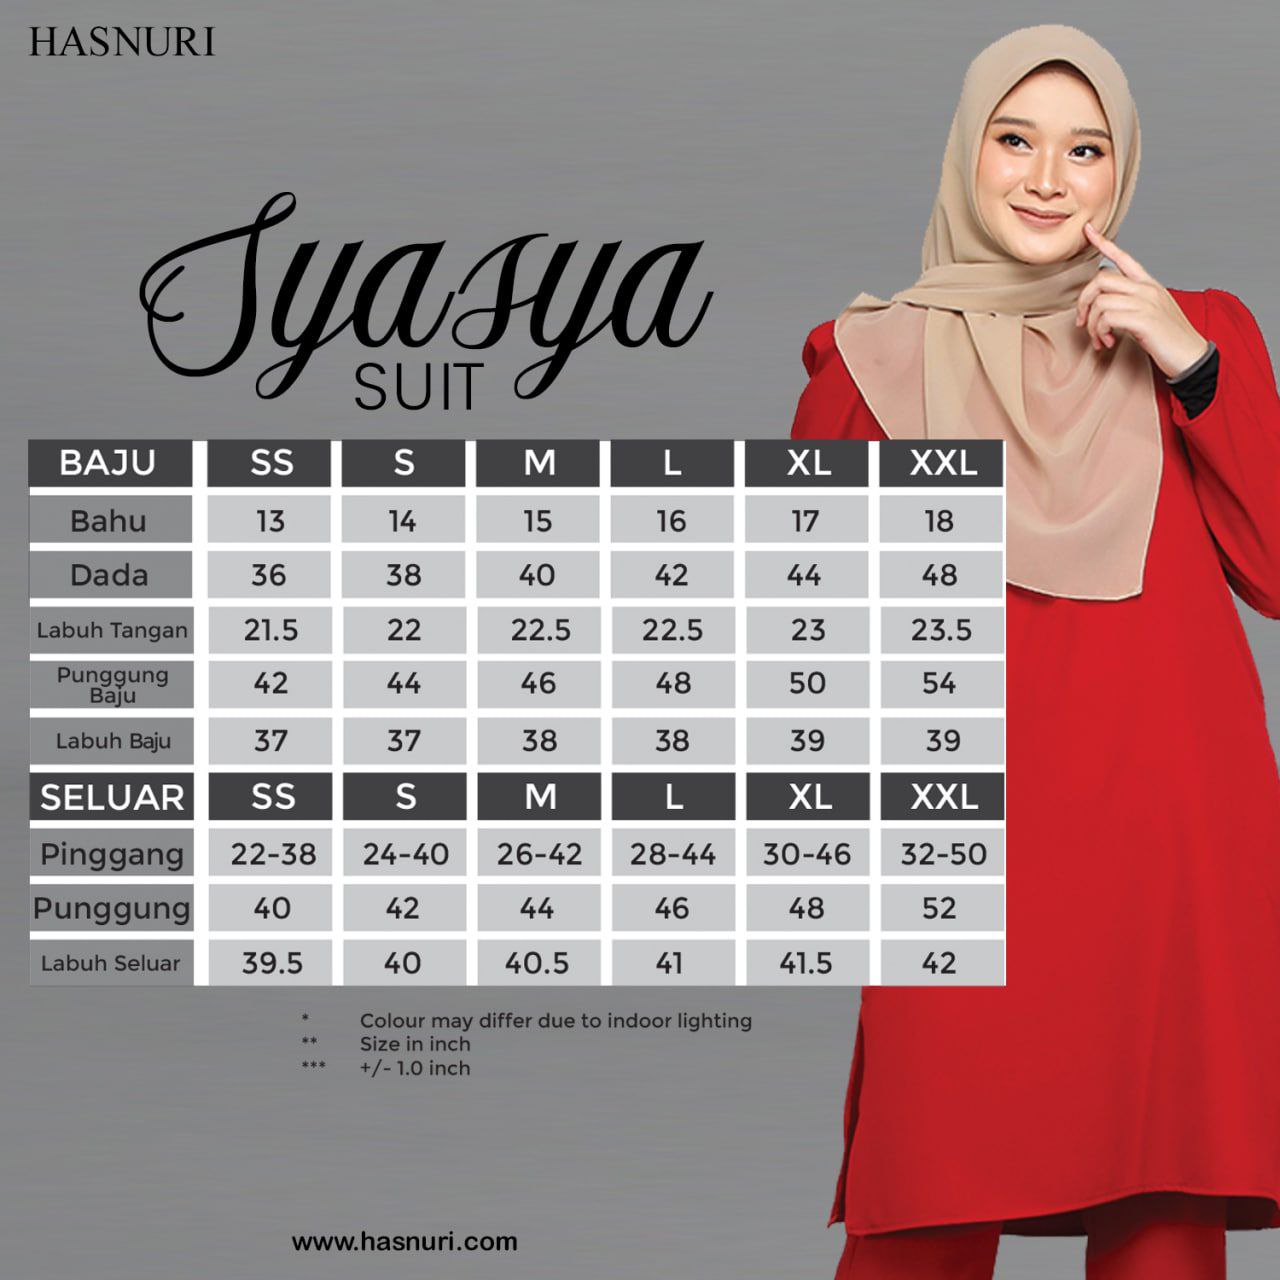 Suit Syasya - Red